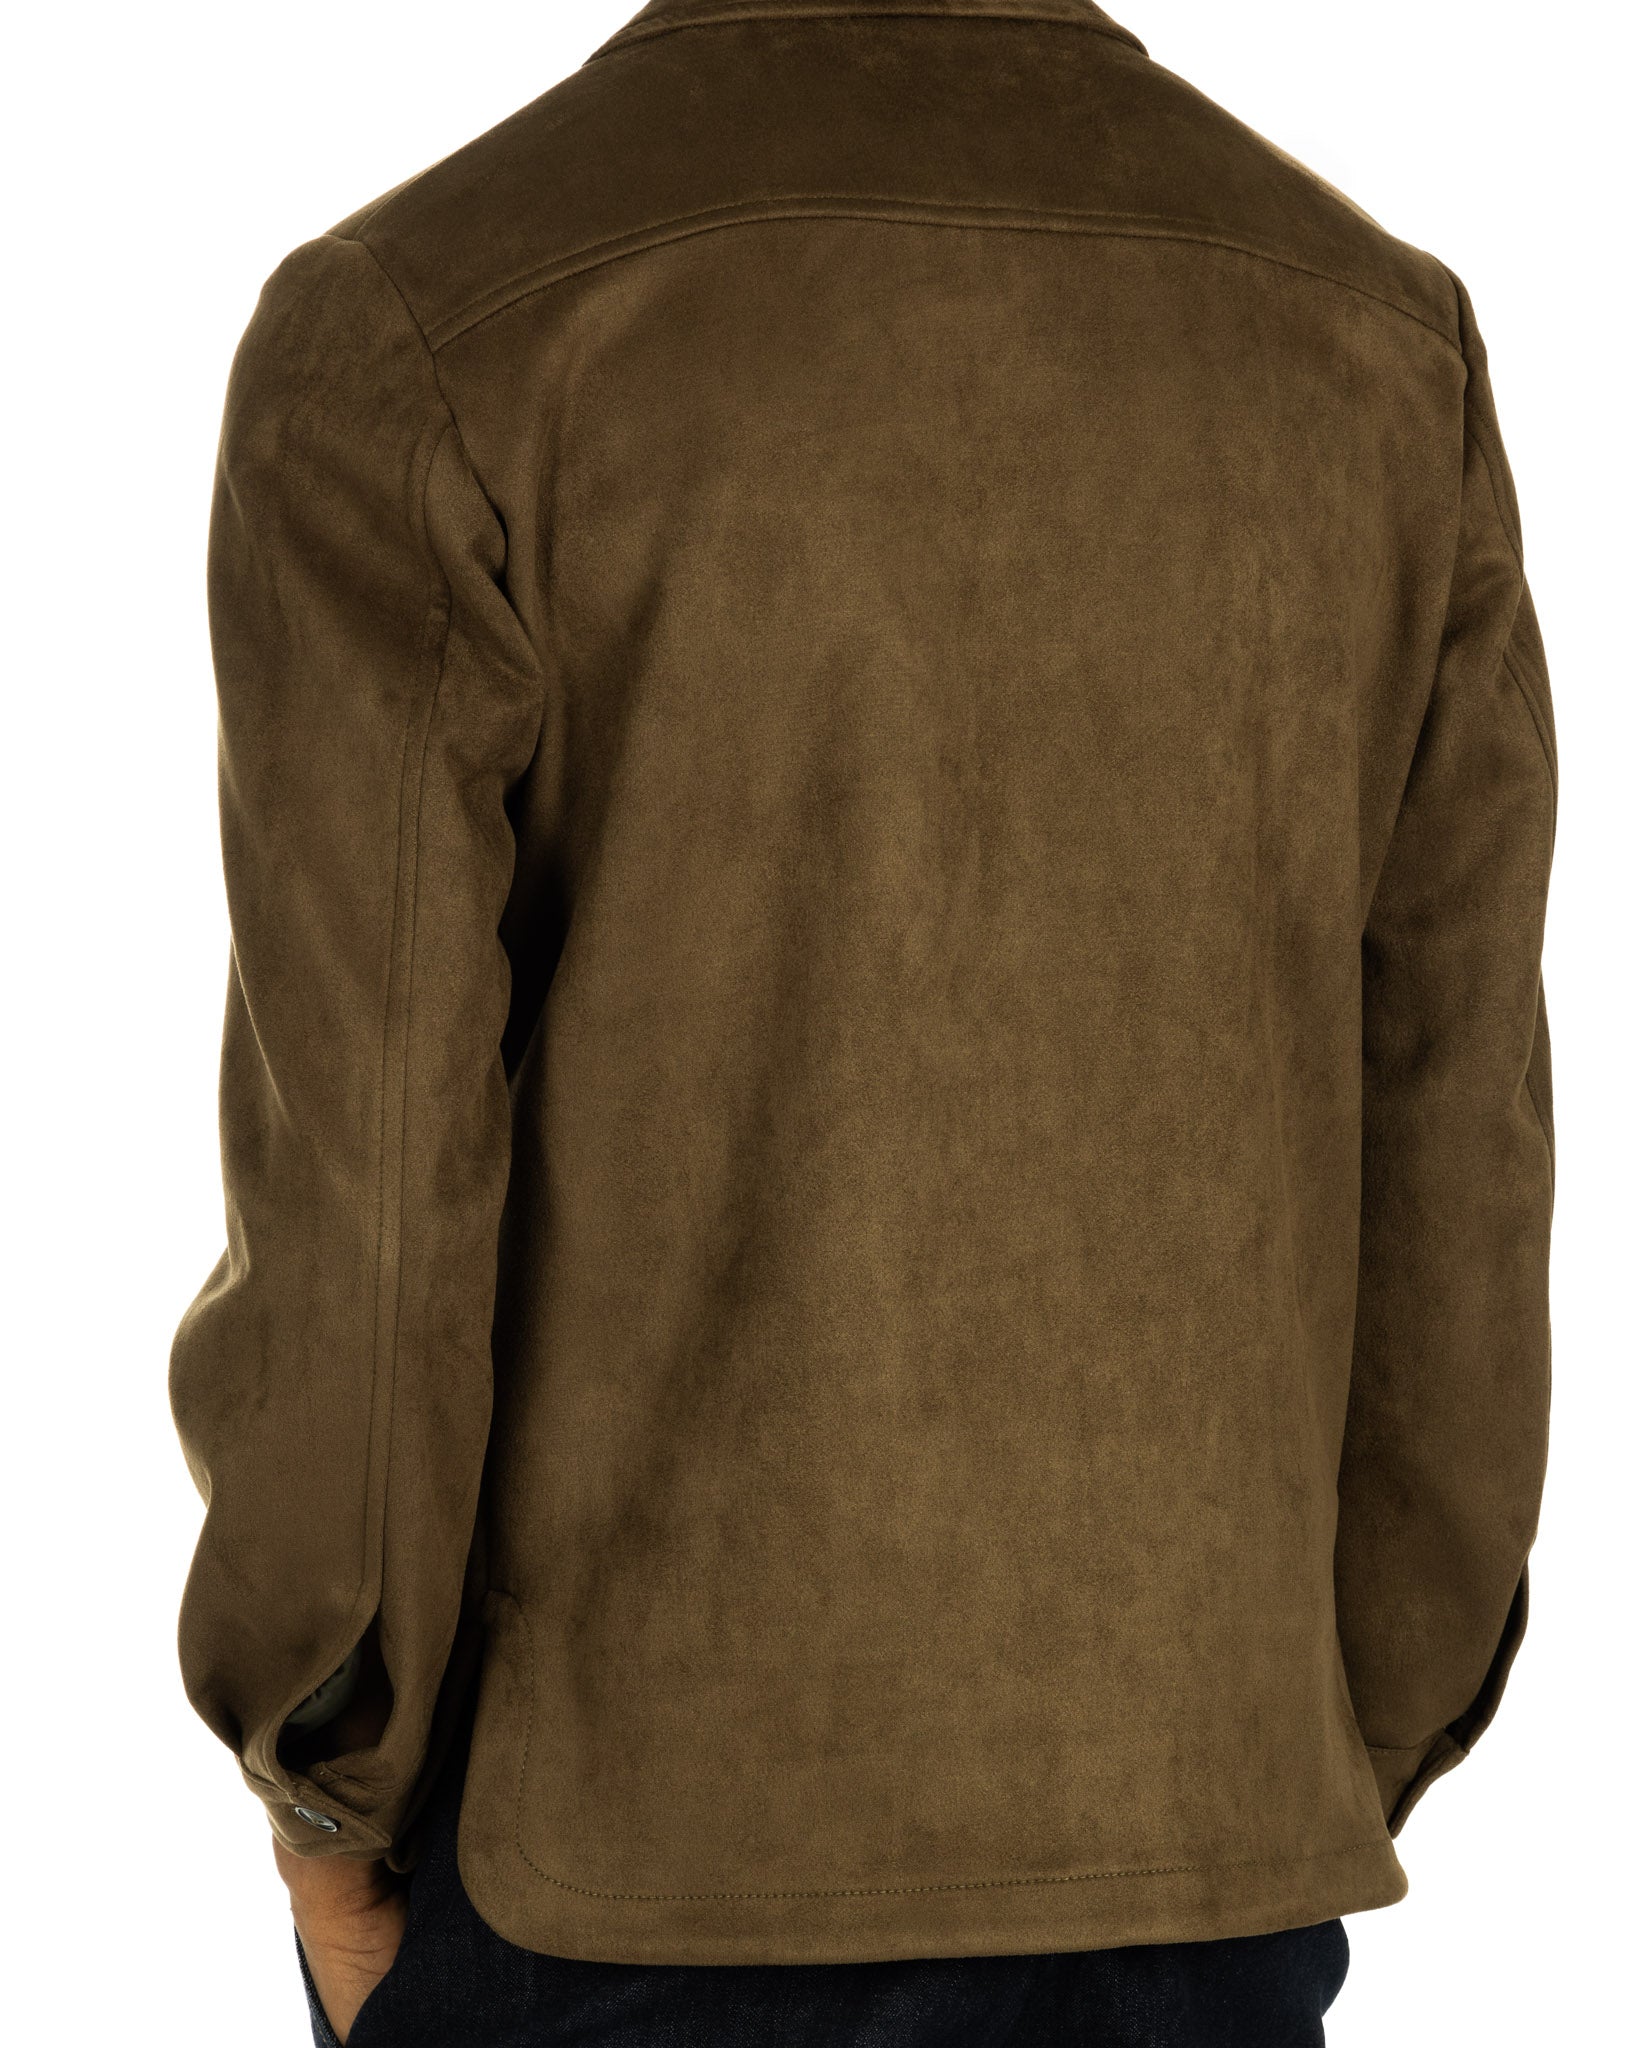 Meridion - giacca militare in camoscio